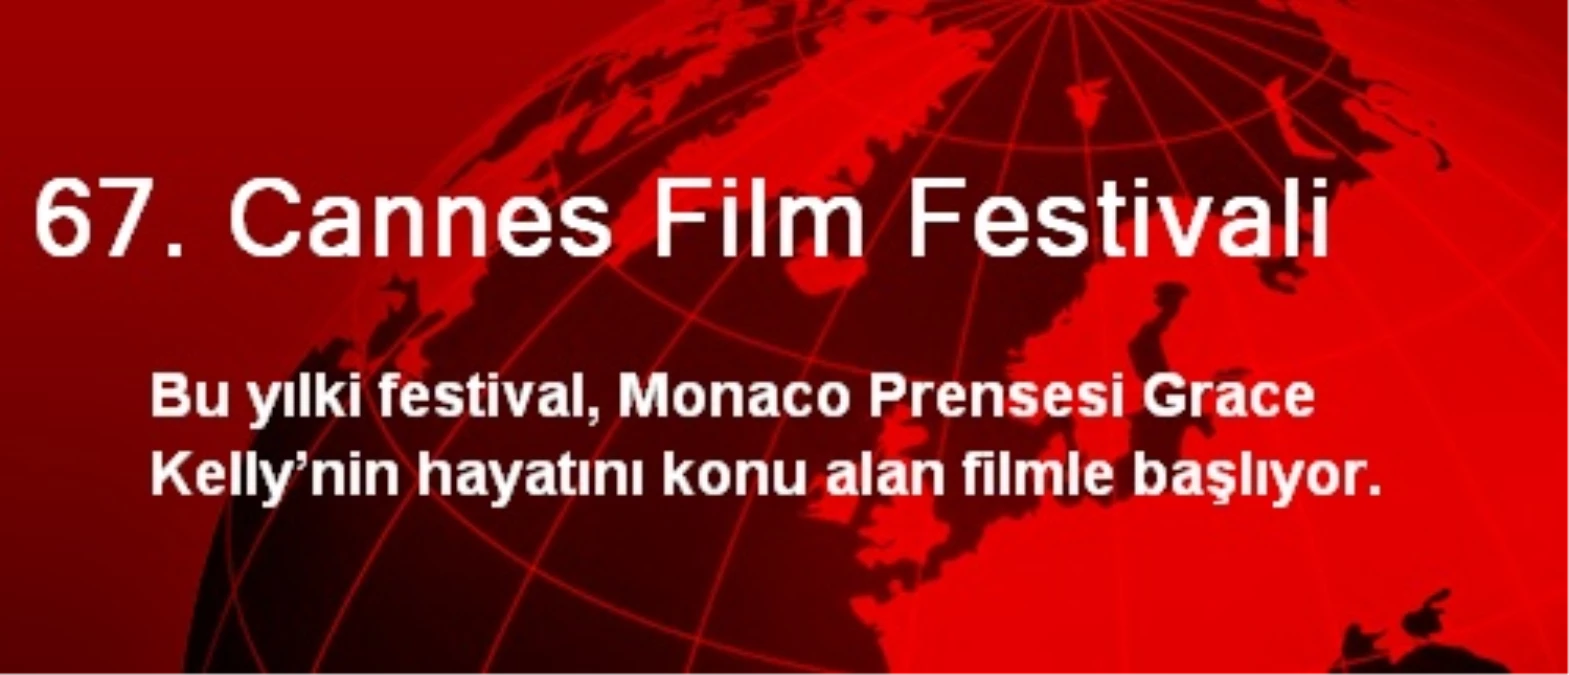 67. Cannes Film Festivali